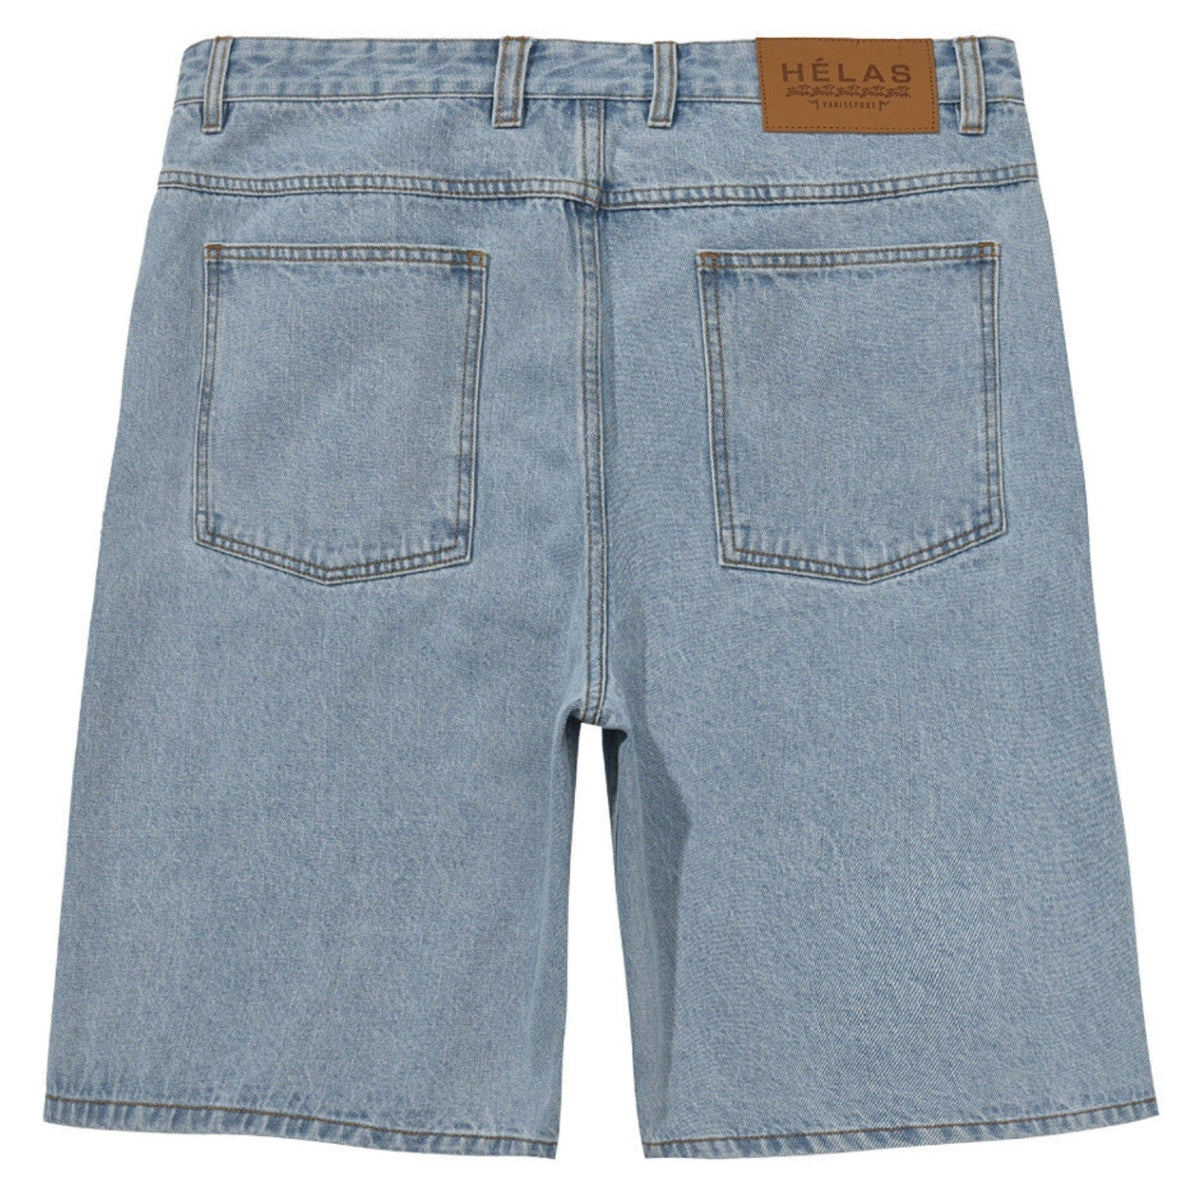 Helas Classic Denim Shorts - Washed Light Blue - Mens Denim Shorts by Helas